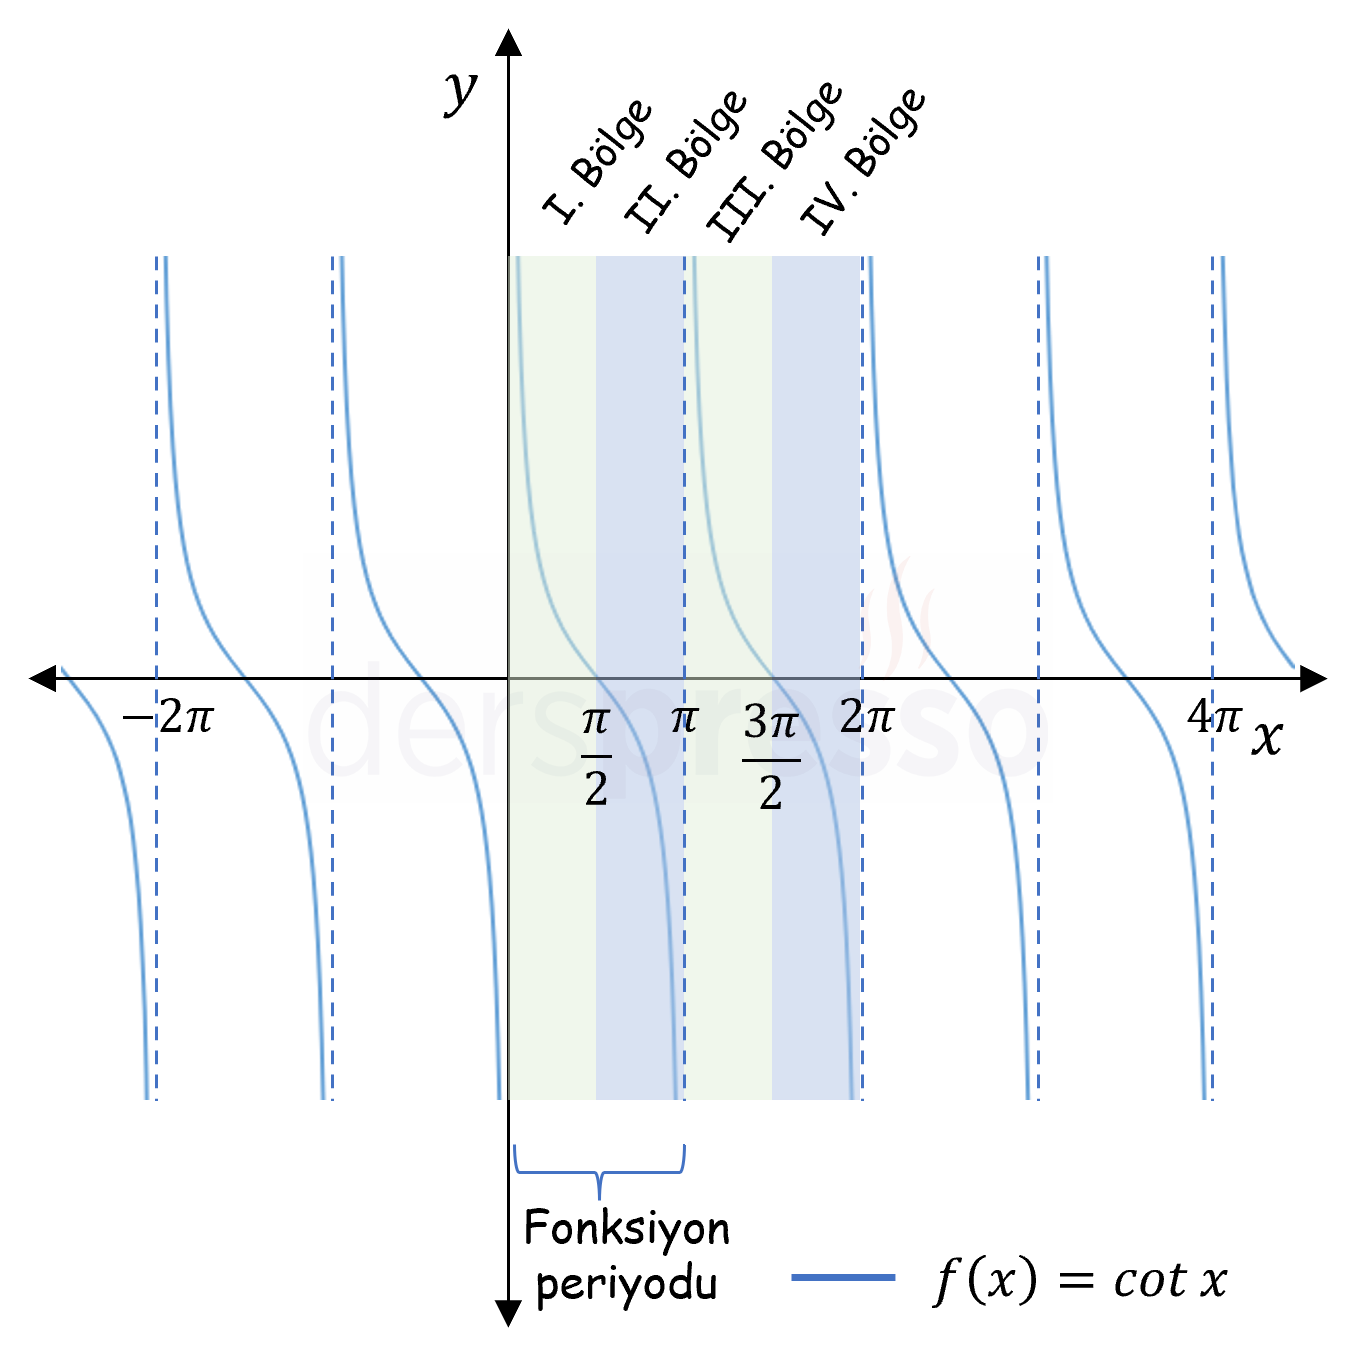 Kotanjant fonksiyon grafiği